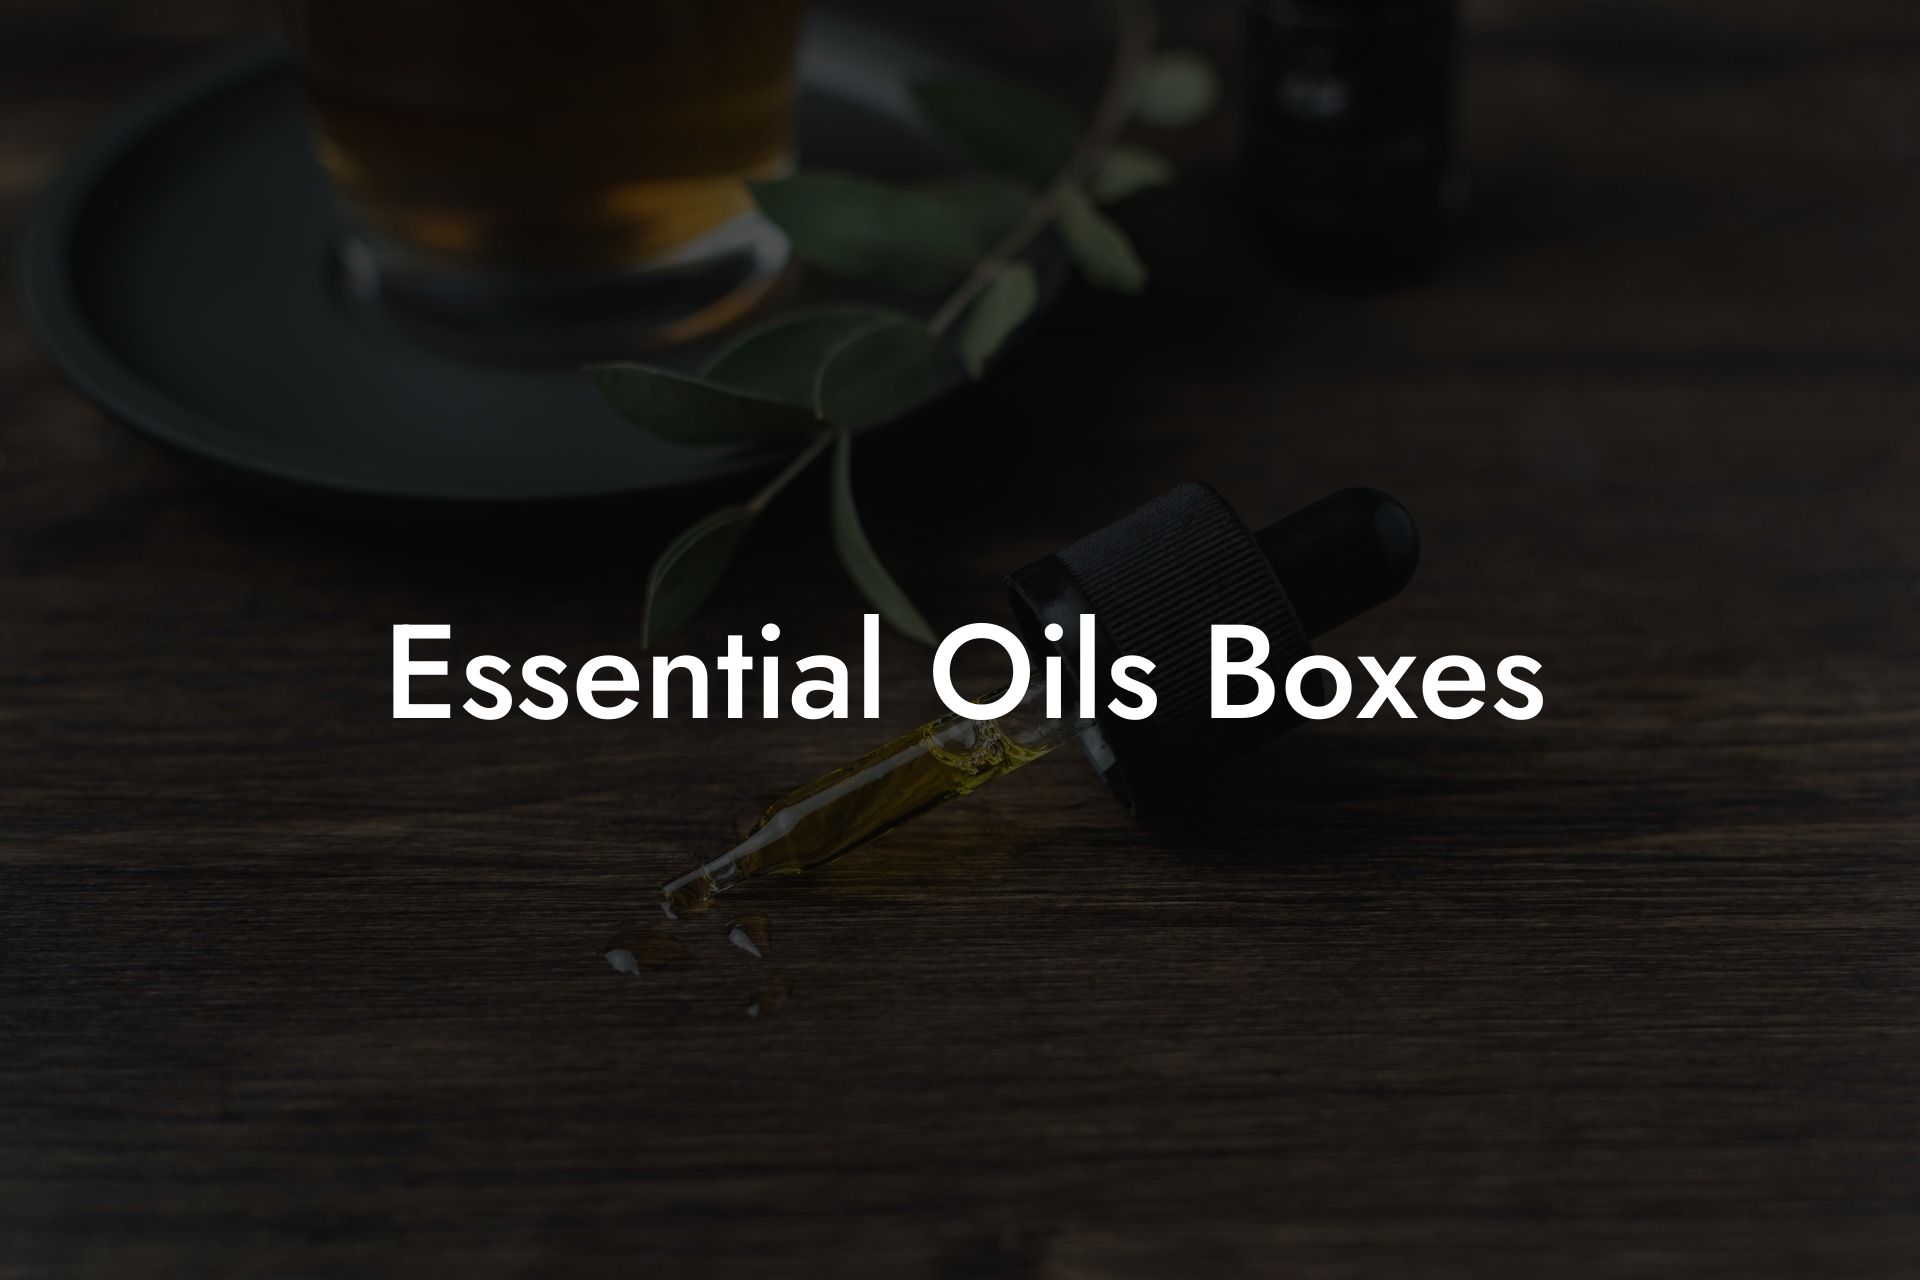 Essential Oils Boxes